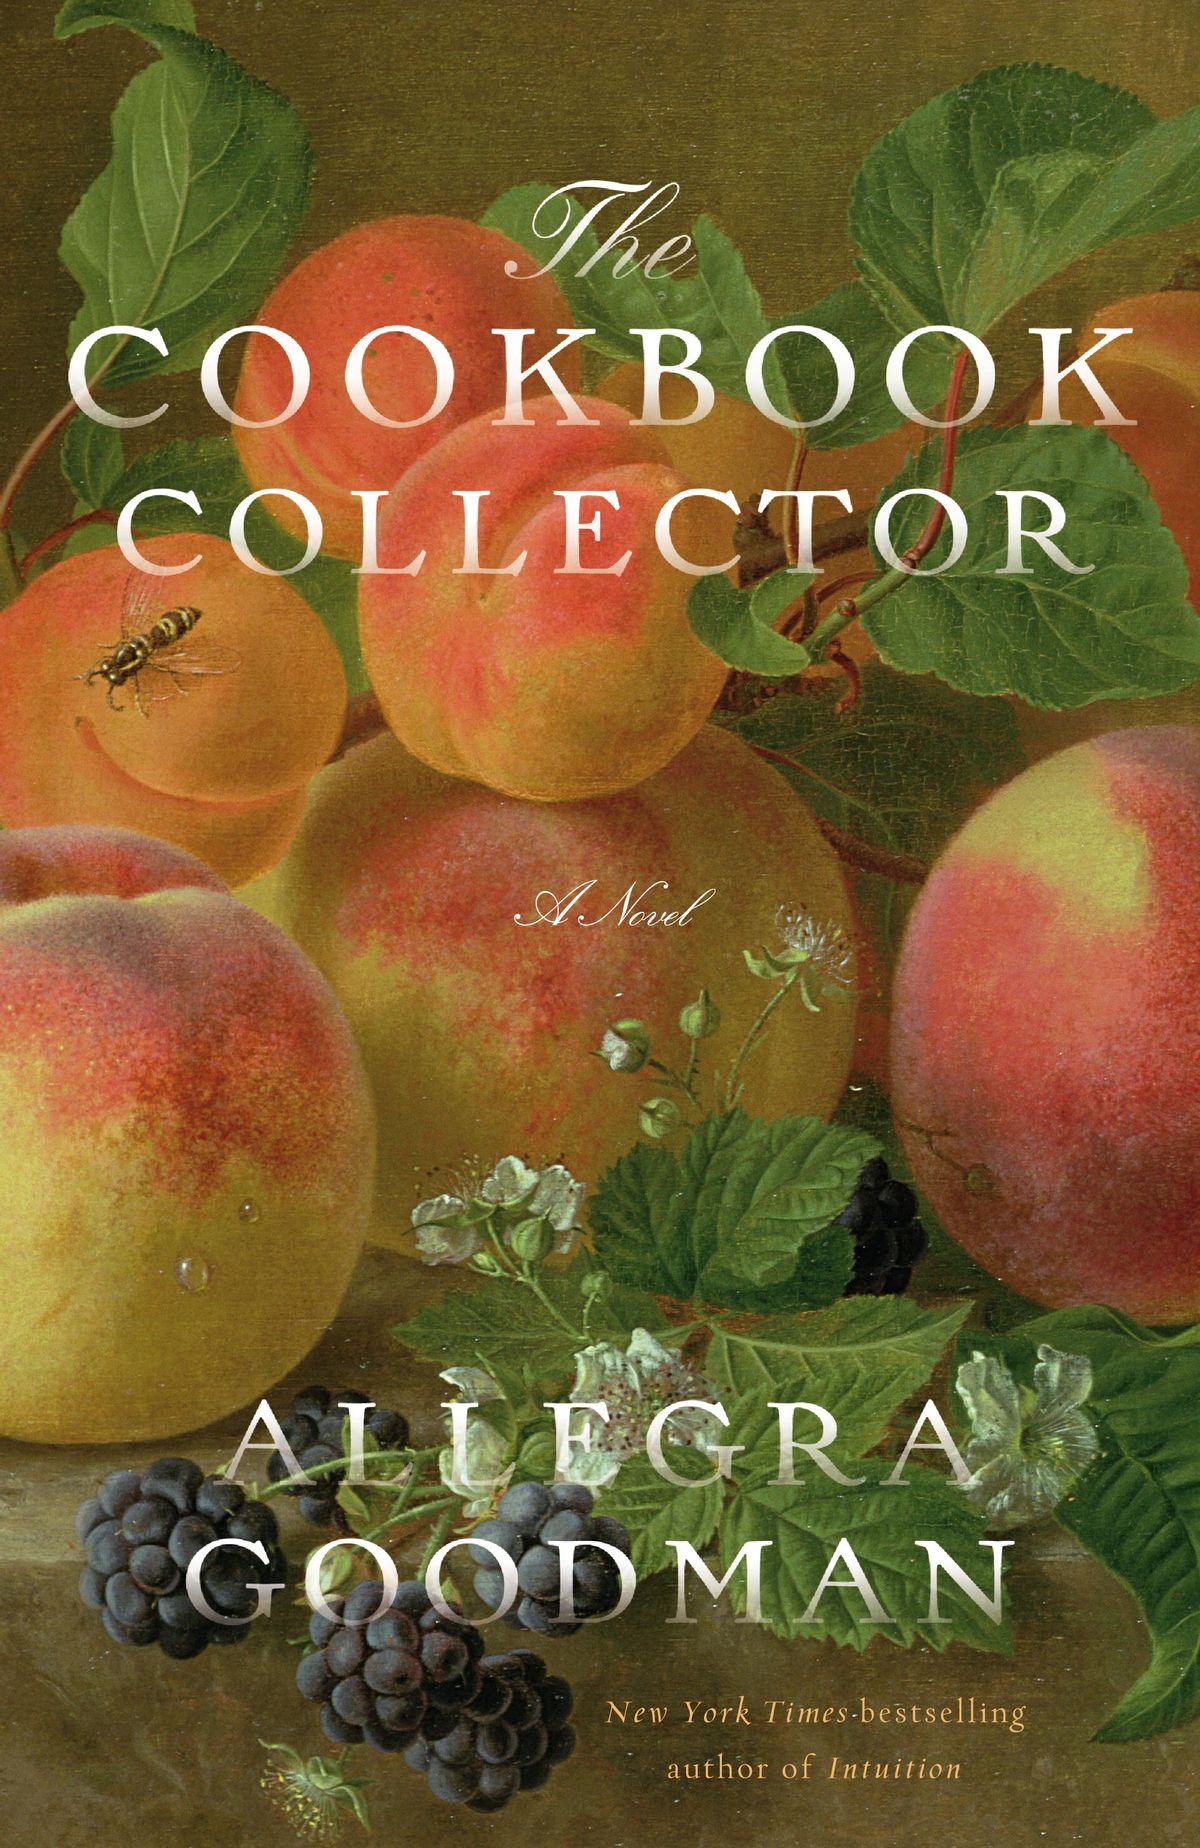 "The Cookbook Collector" by Allegra Goodman